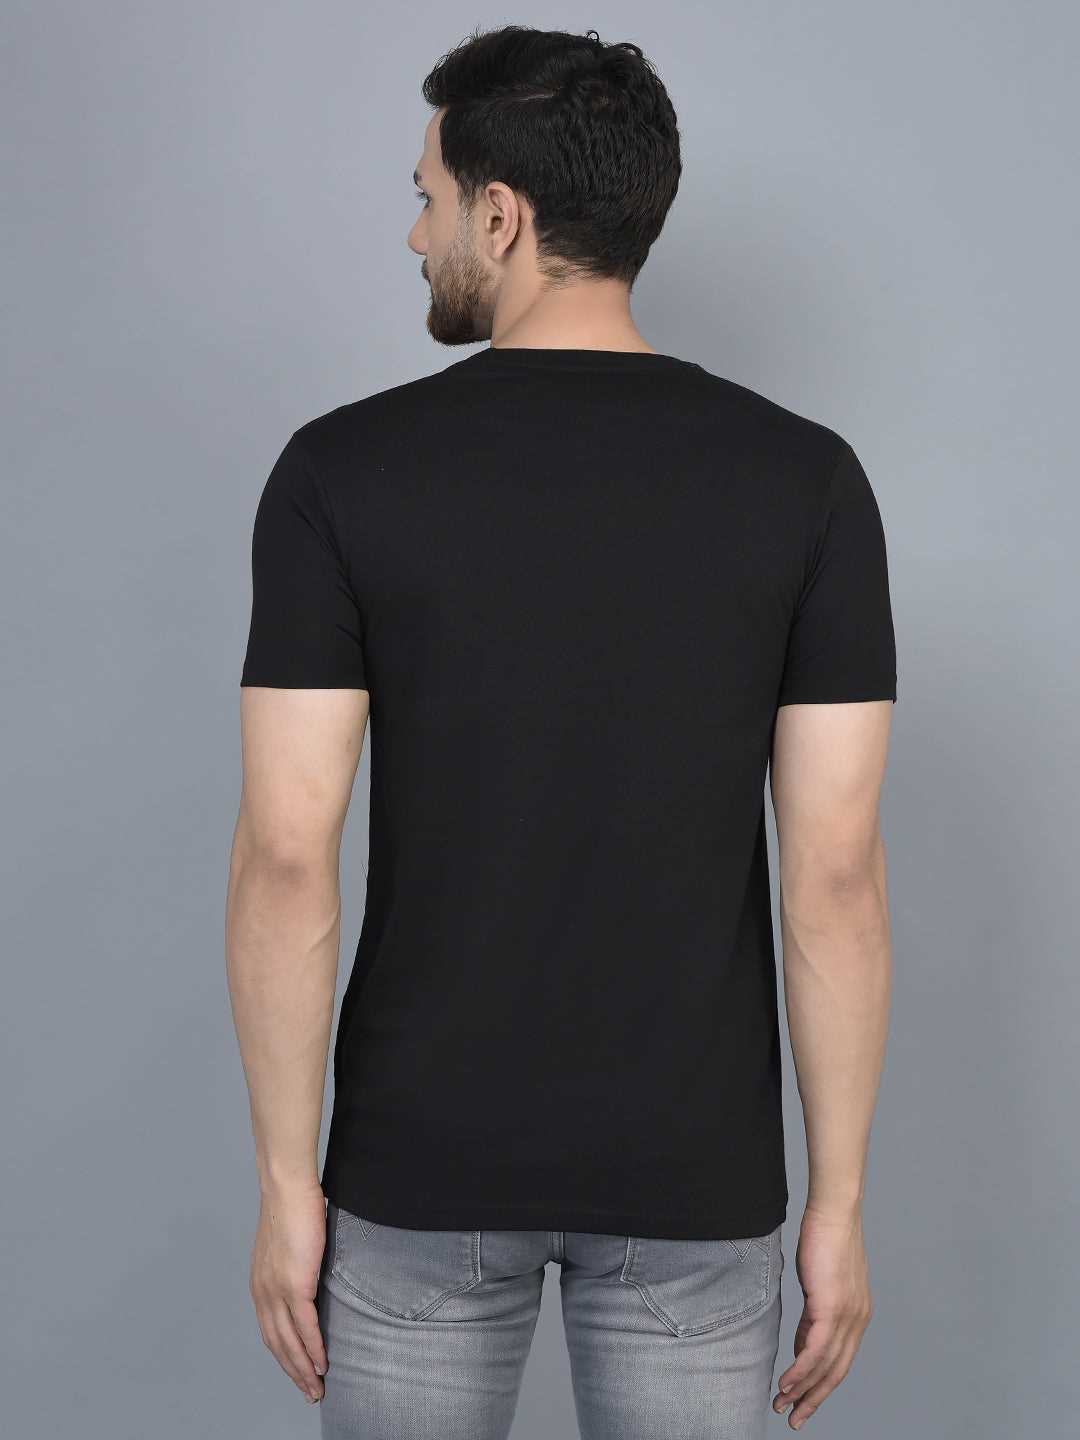 Cobb Black Printed Round Neck T-Shirt